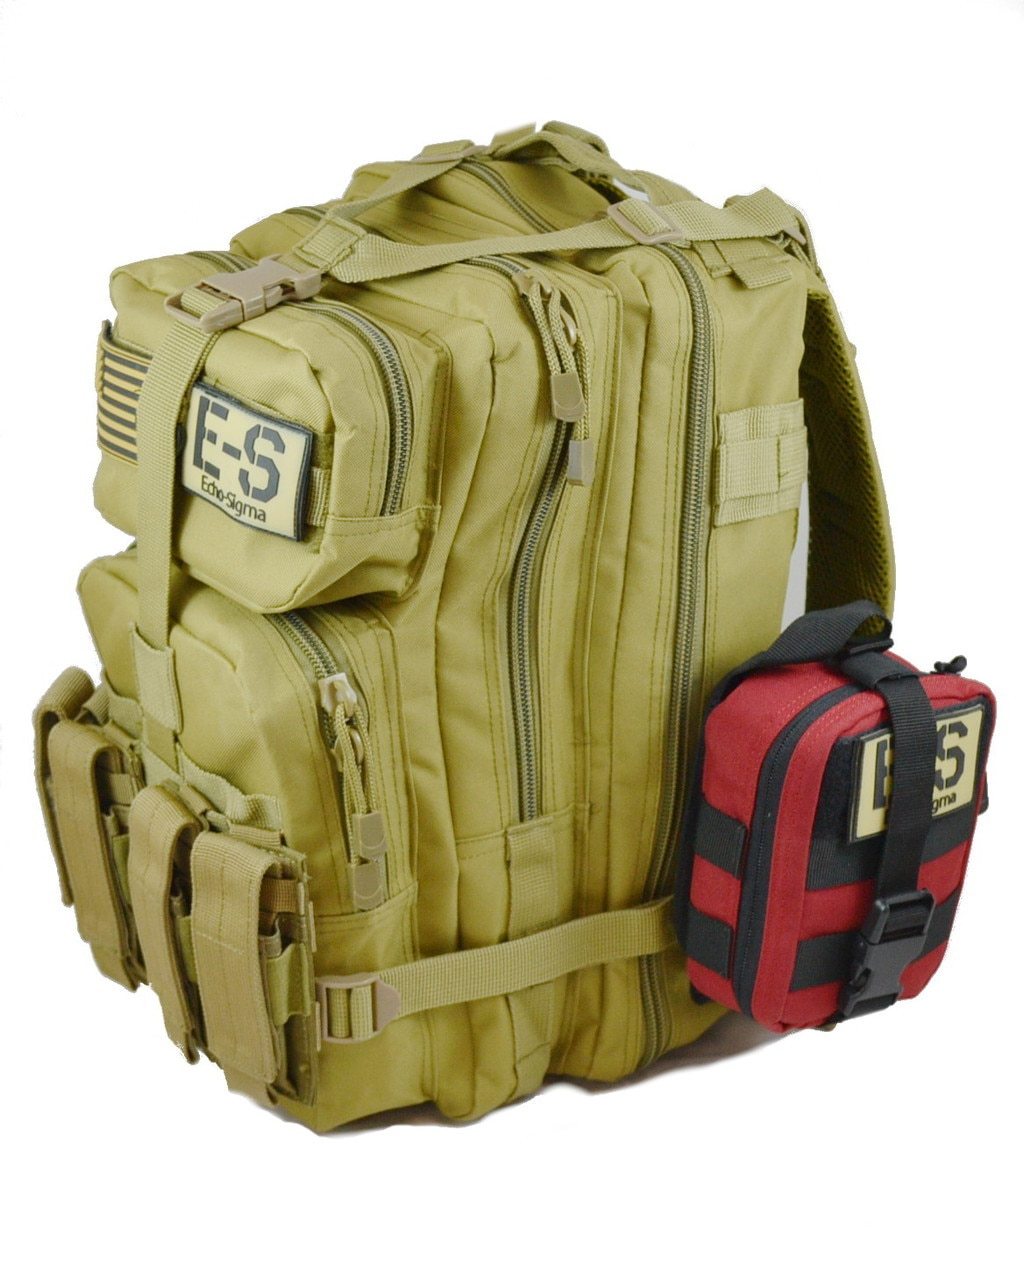 Echo-Sigma Ranger - Range Bag W/Compact Trauma kit